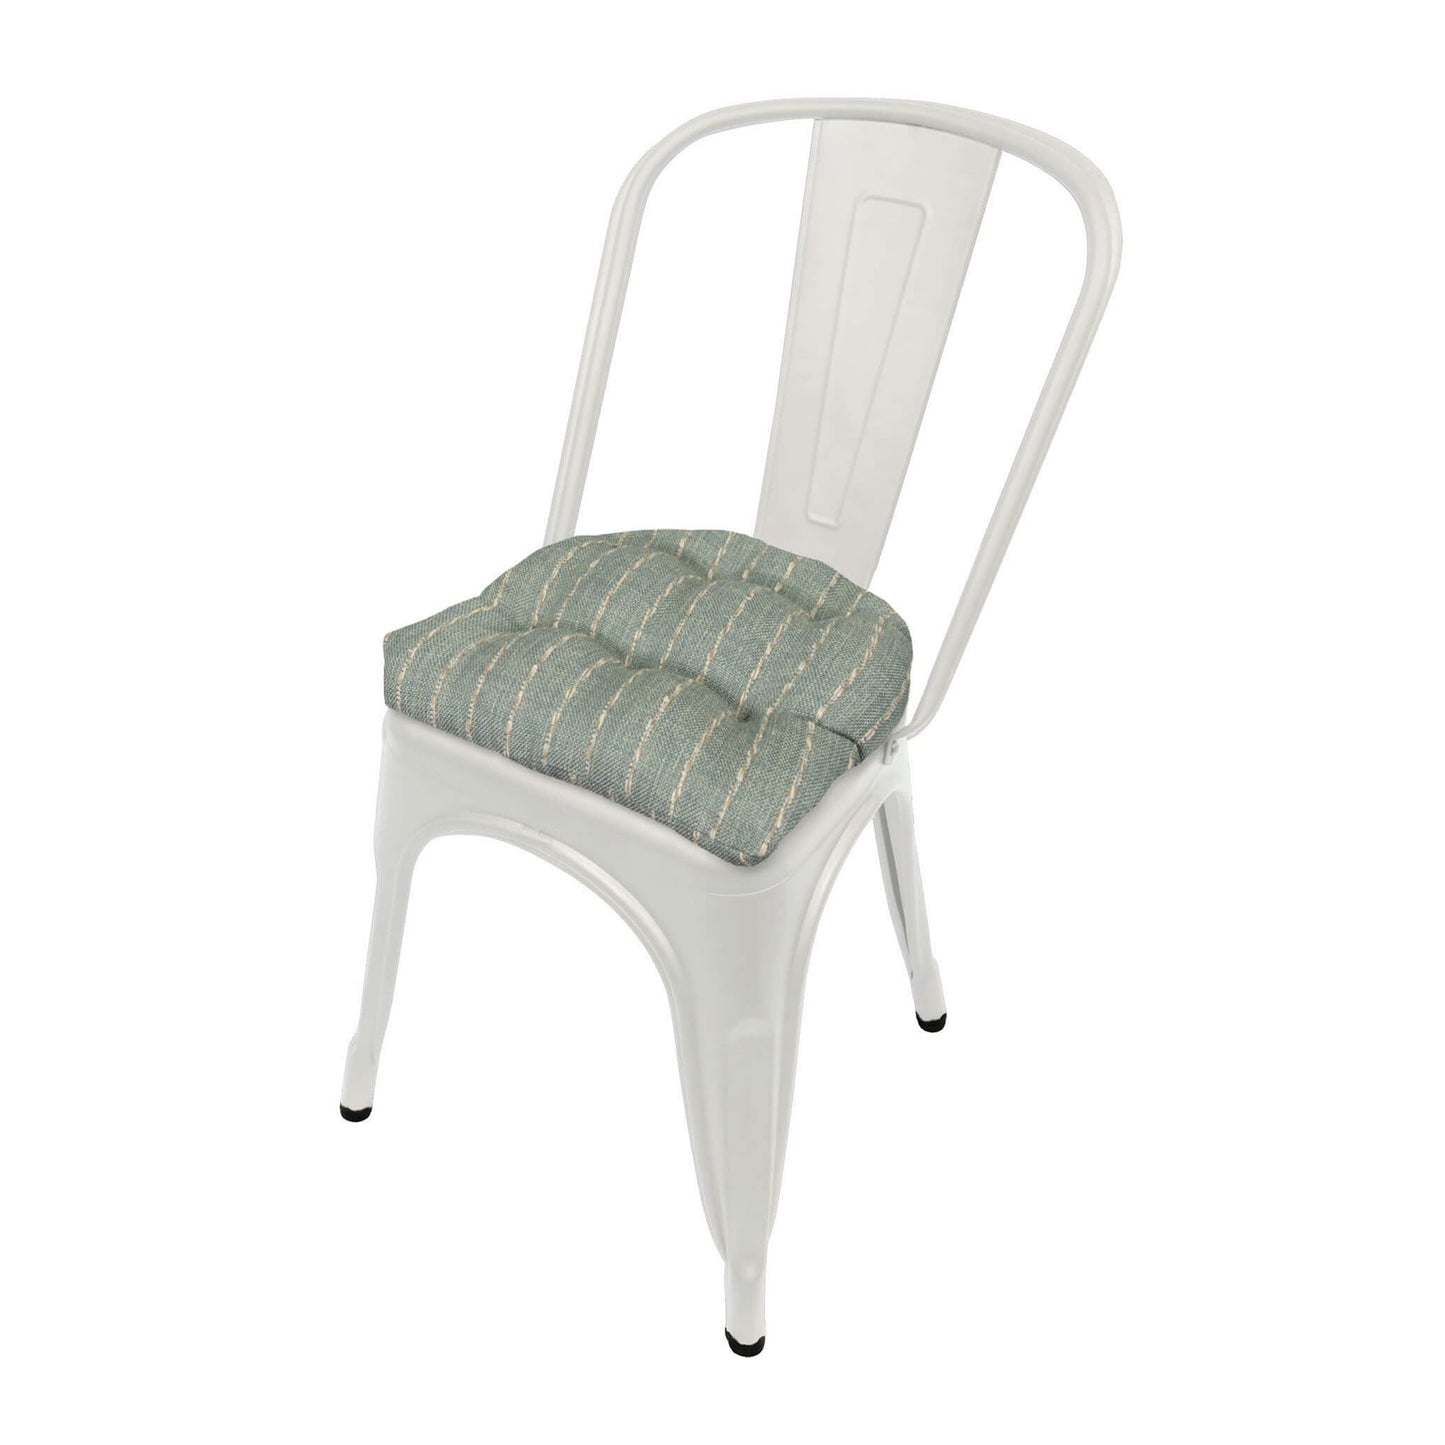 Avante Spa Industrial Chair Cushions  - Latex Foam Fill - Reversible